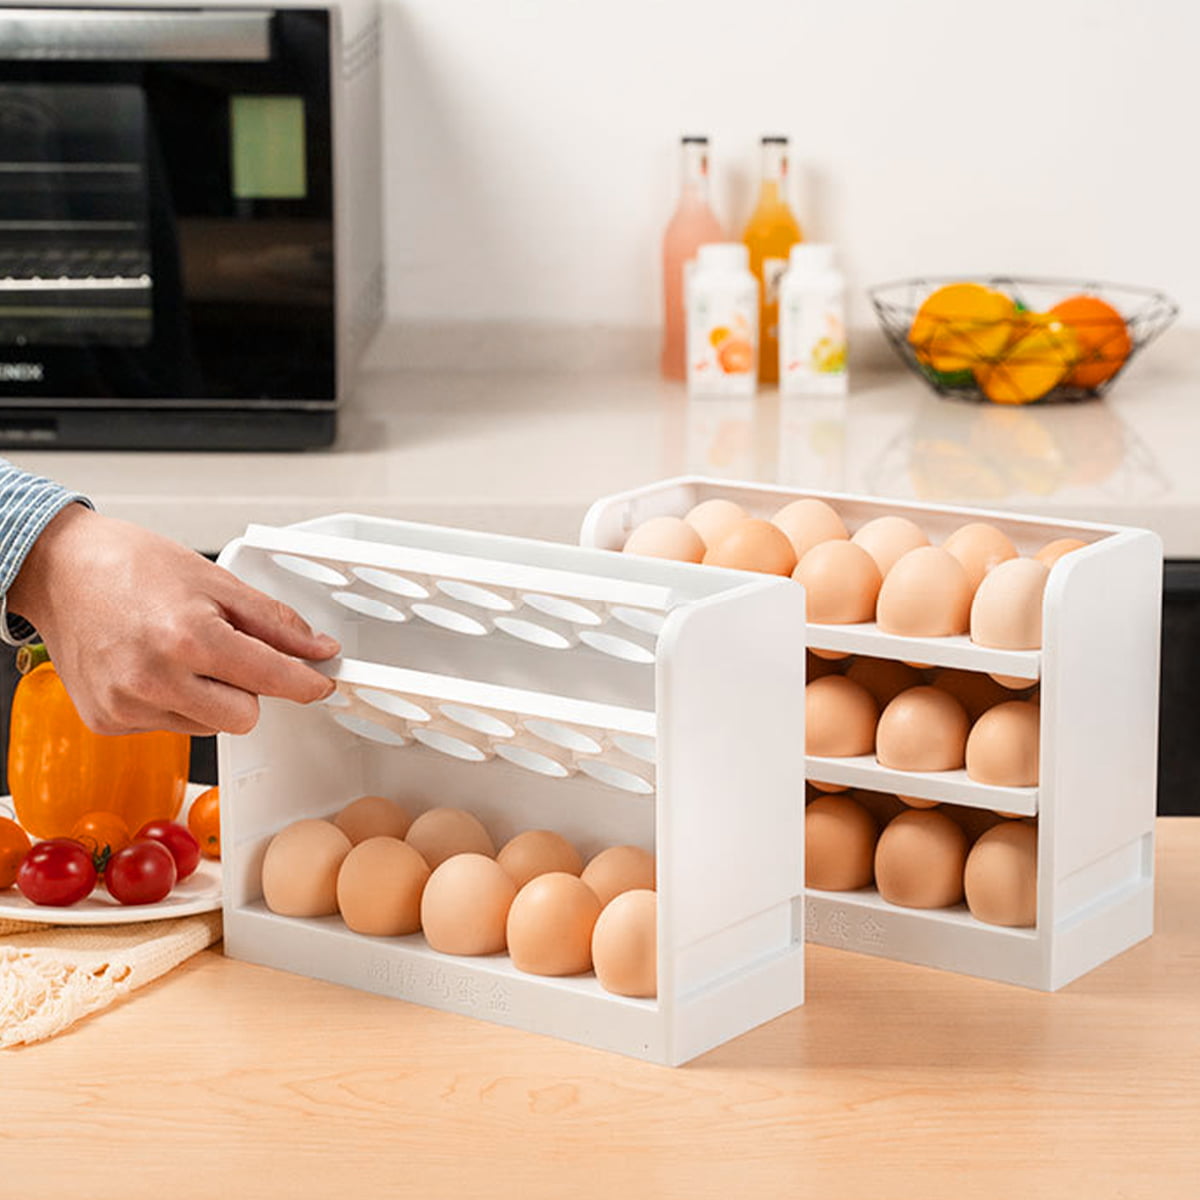 24 Egg Layer Refrigerator Container Kitchen Storage Home Box Plastic White 